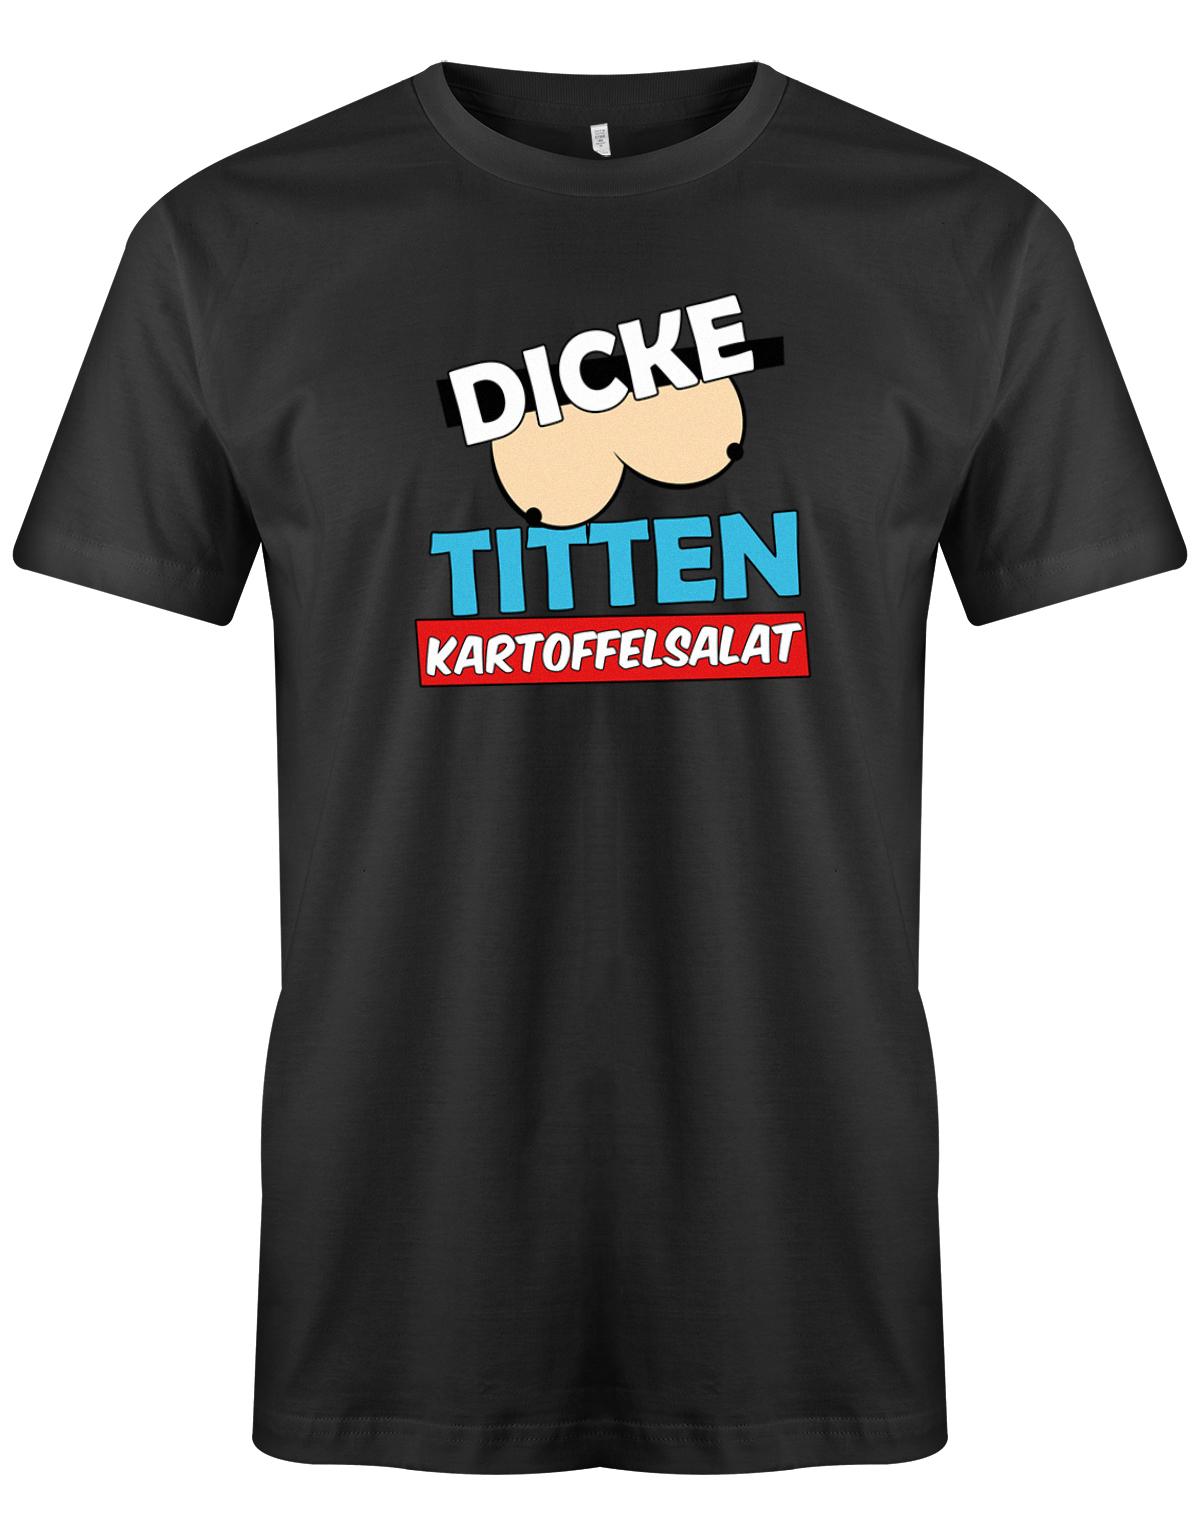 Dicke-Titten-Kartoffelsalat-Herren-Shirt-schwarz